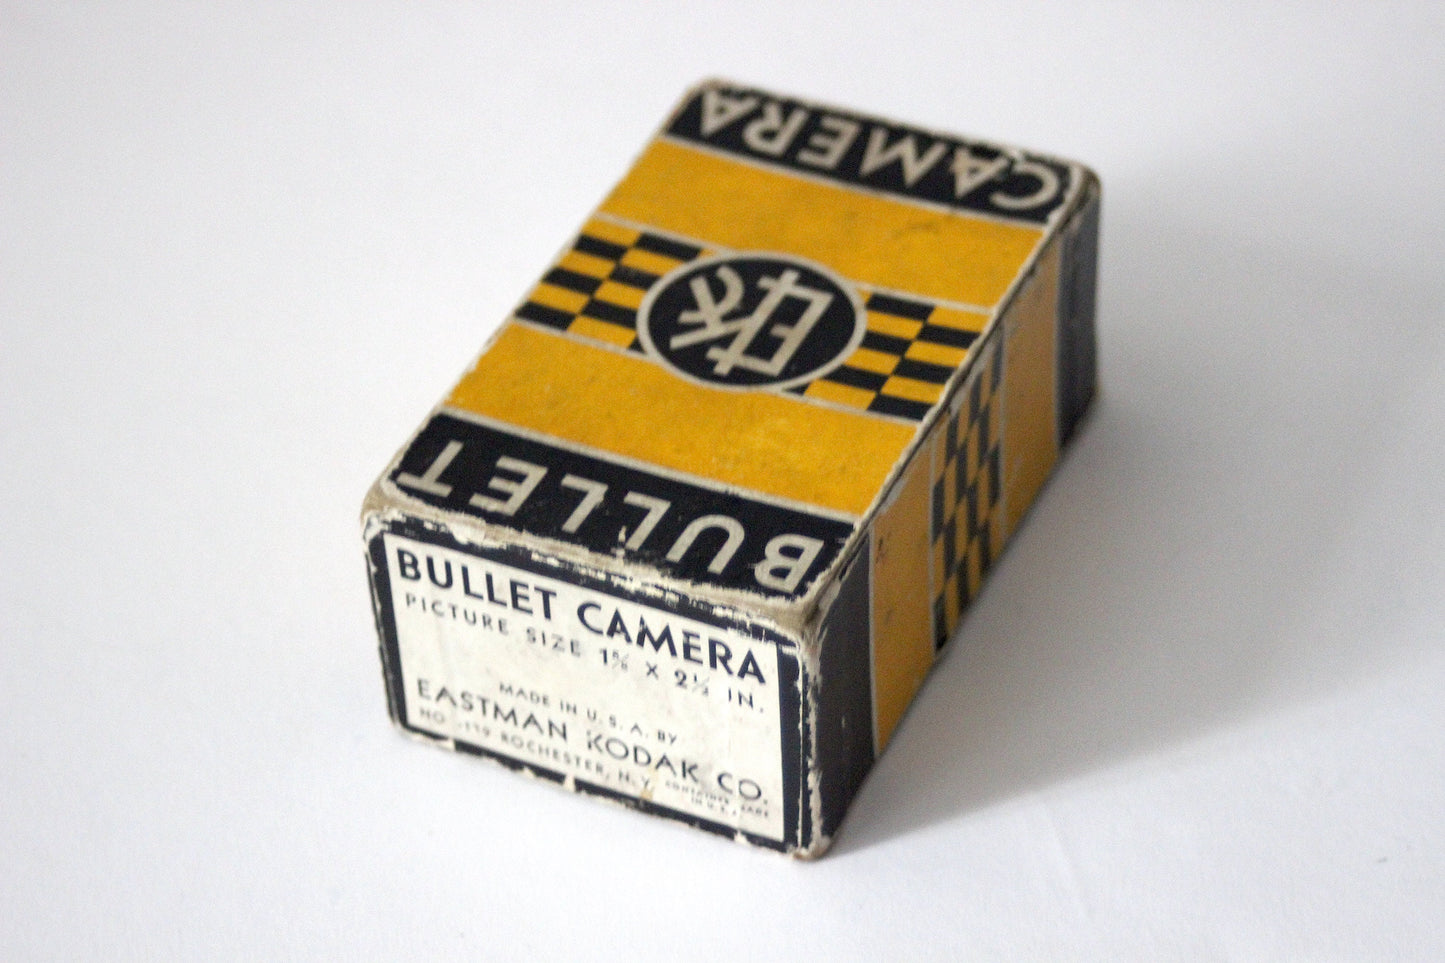 Kodak Bullet 127 camera. USA 1930s/1940s. Art Deco